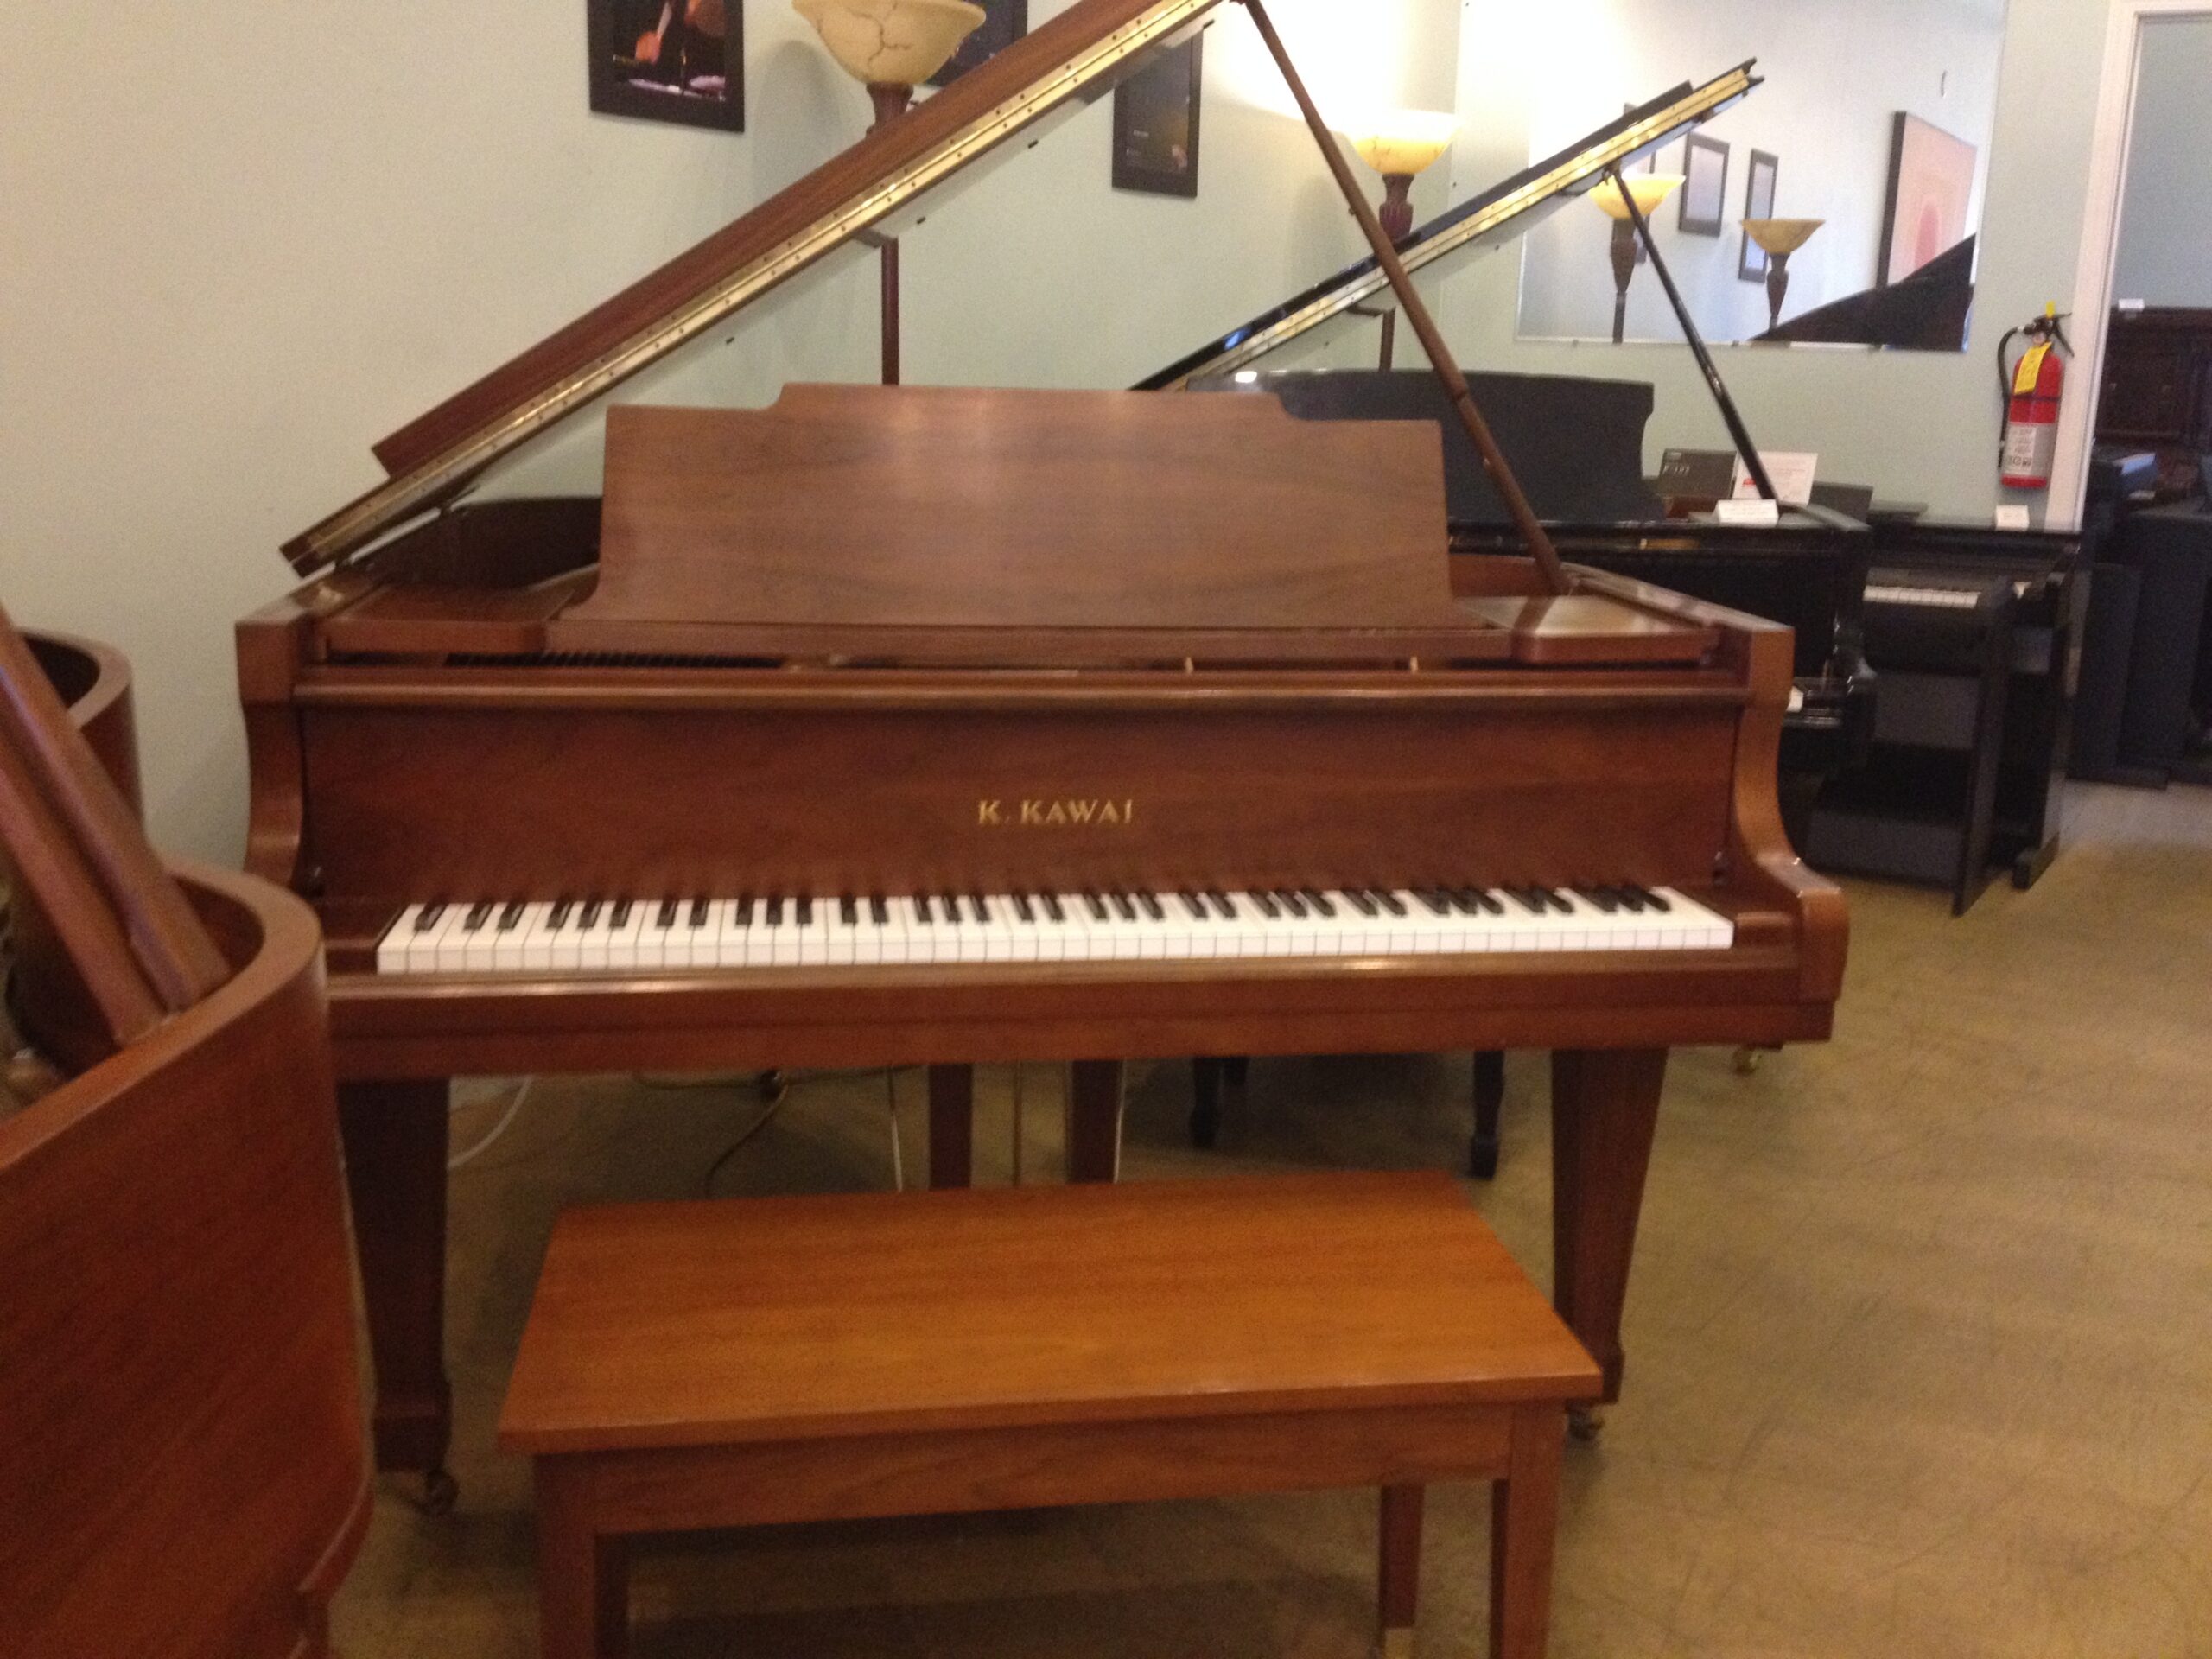 Kawai 5’10” Grand Piano